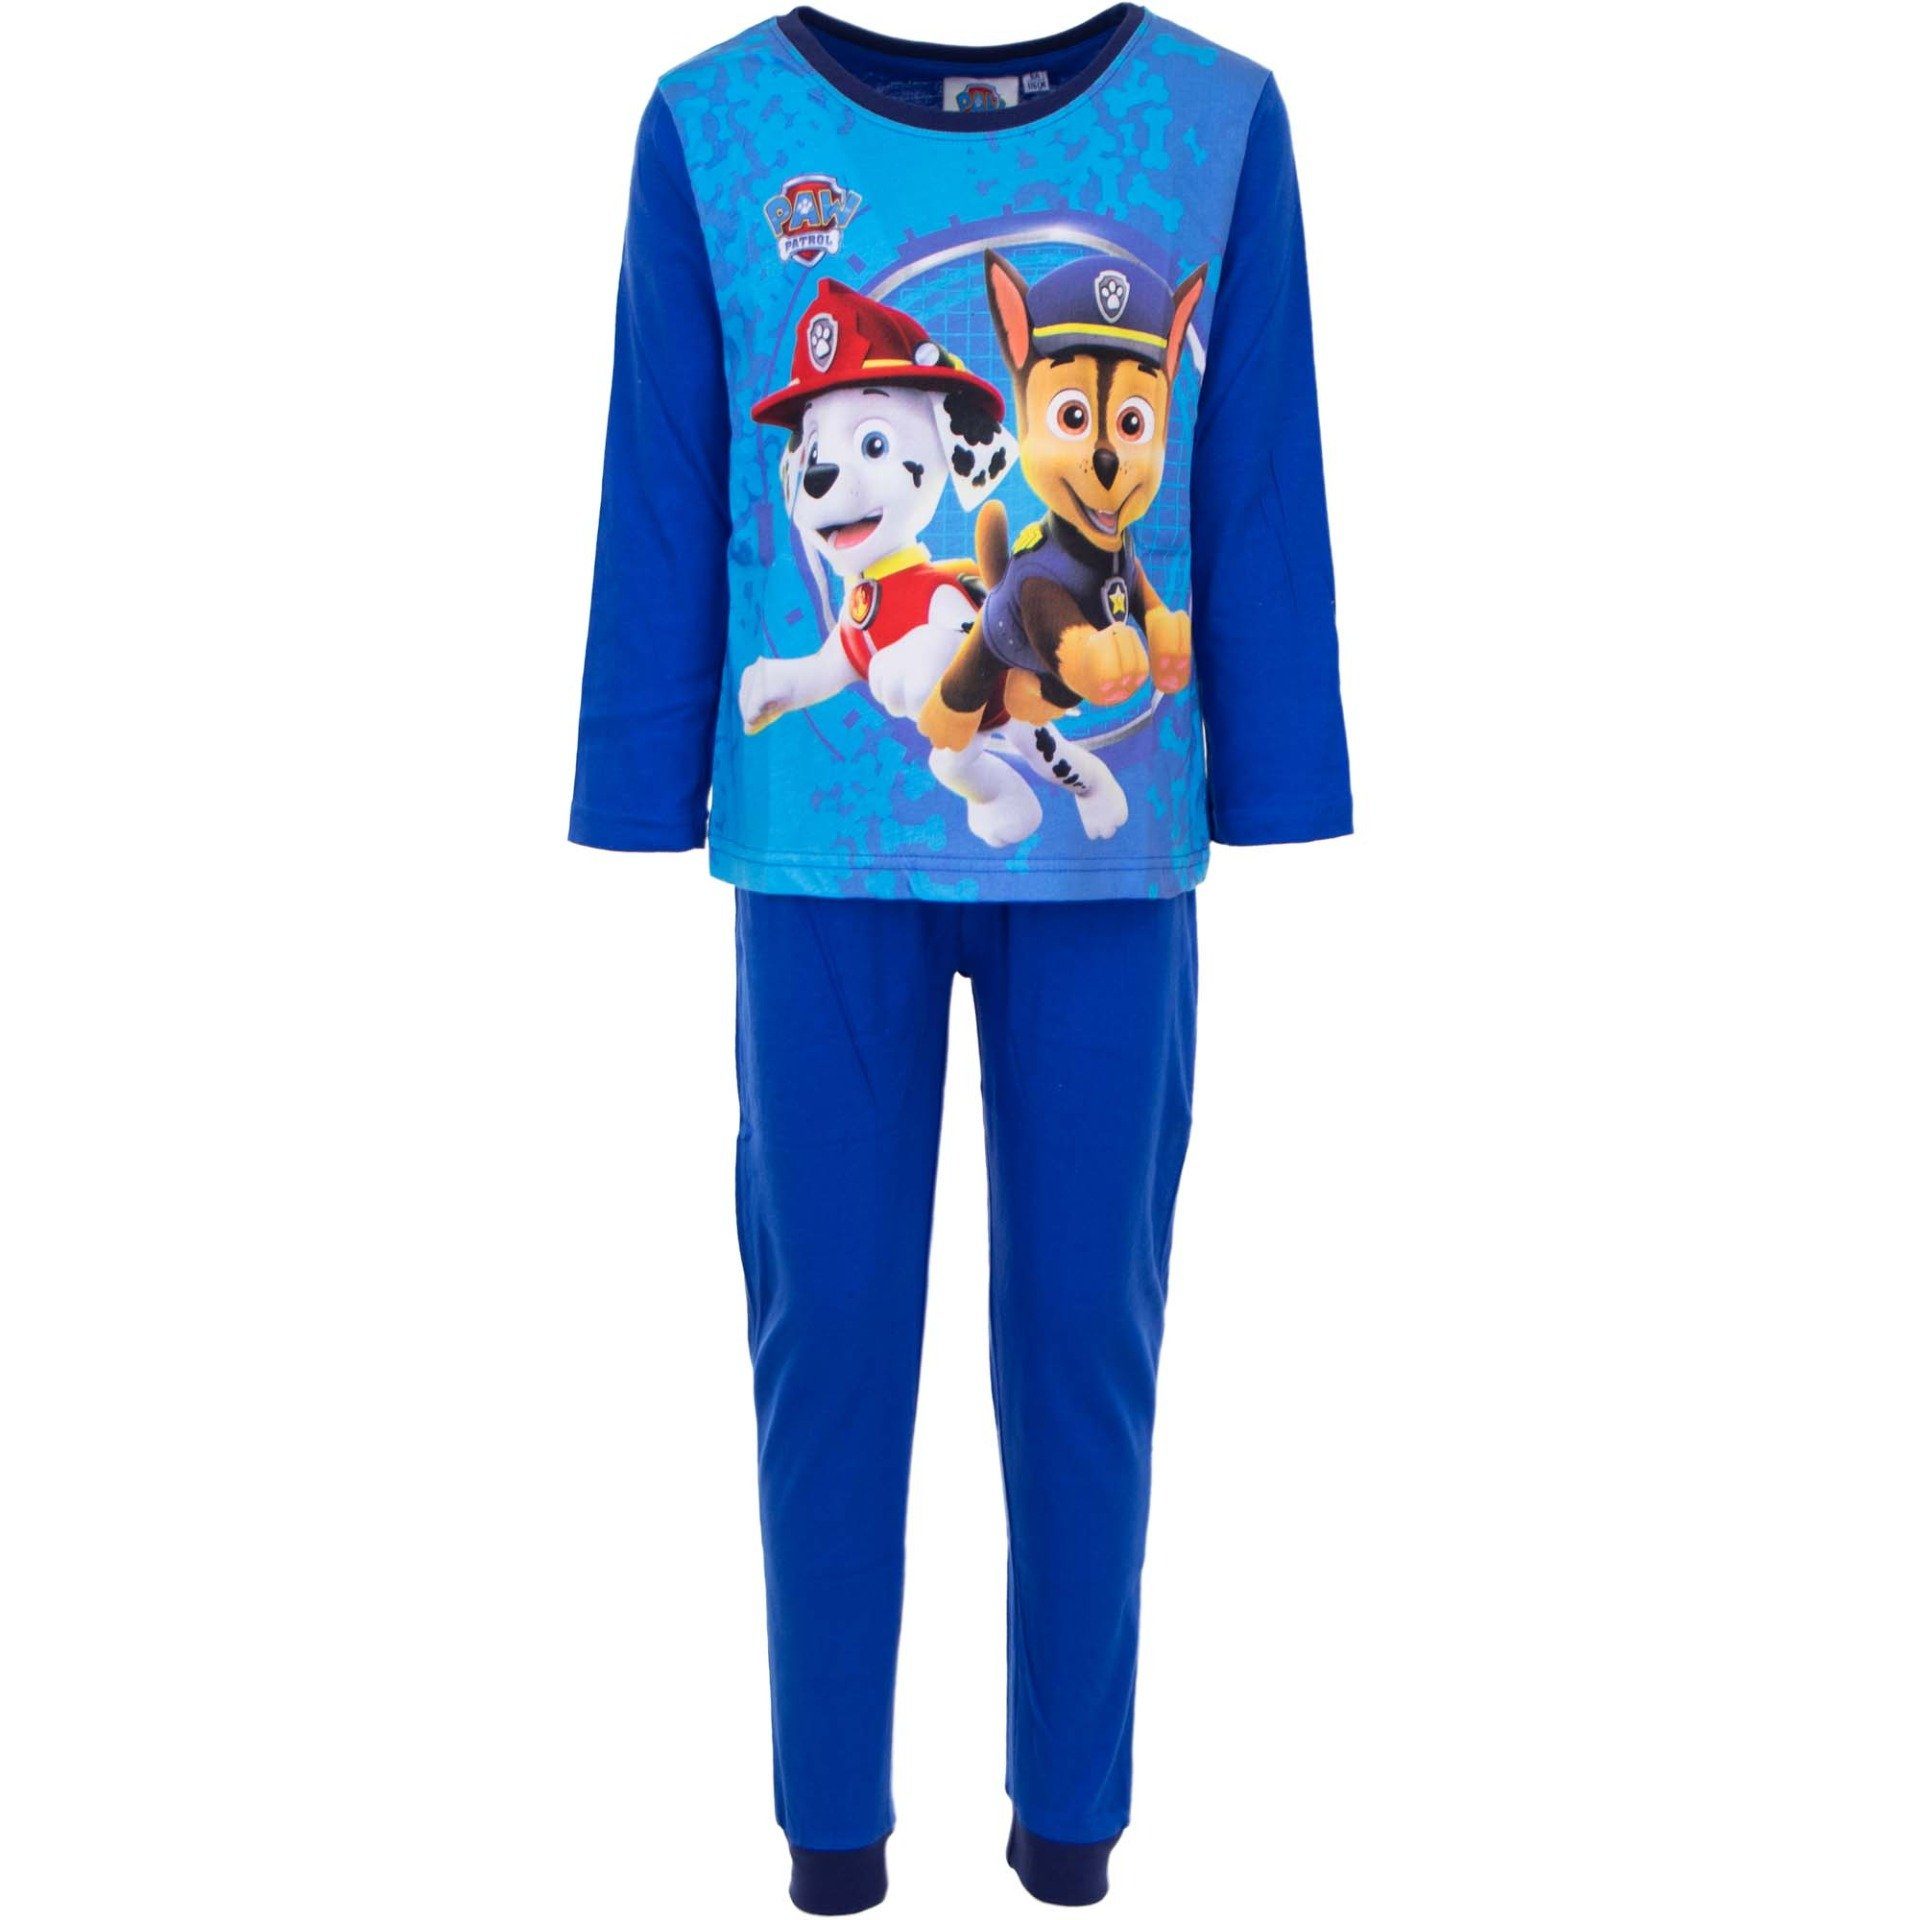 PAW PATROL Schlafanzug Chase Kinder Pyjama Gr. 92 bis 116, Baumwolle, Blau